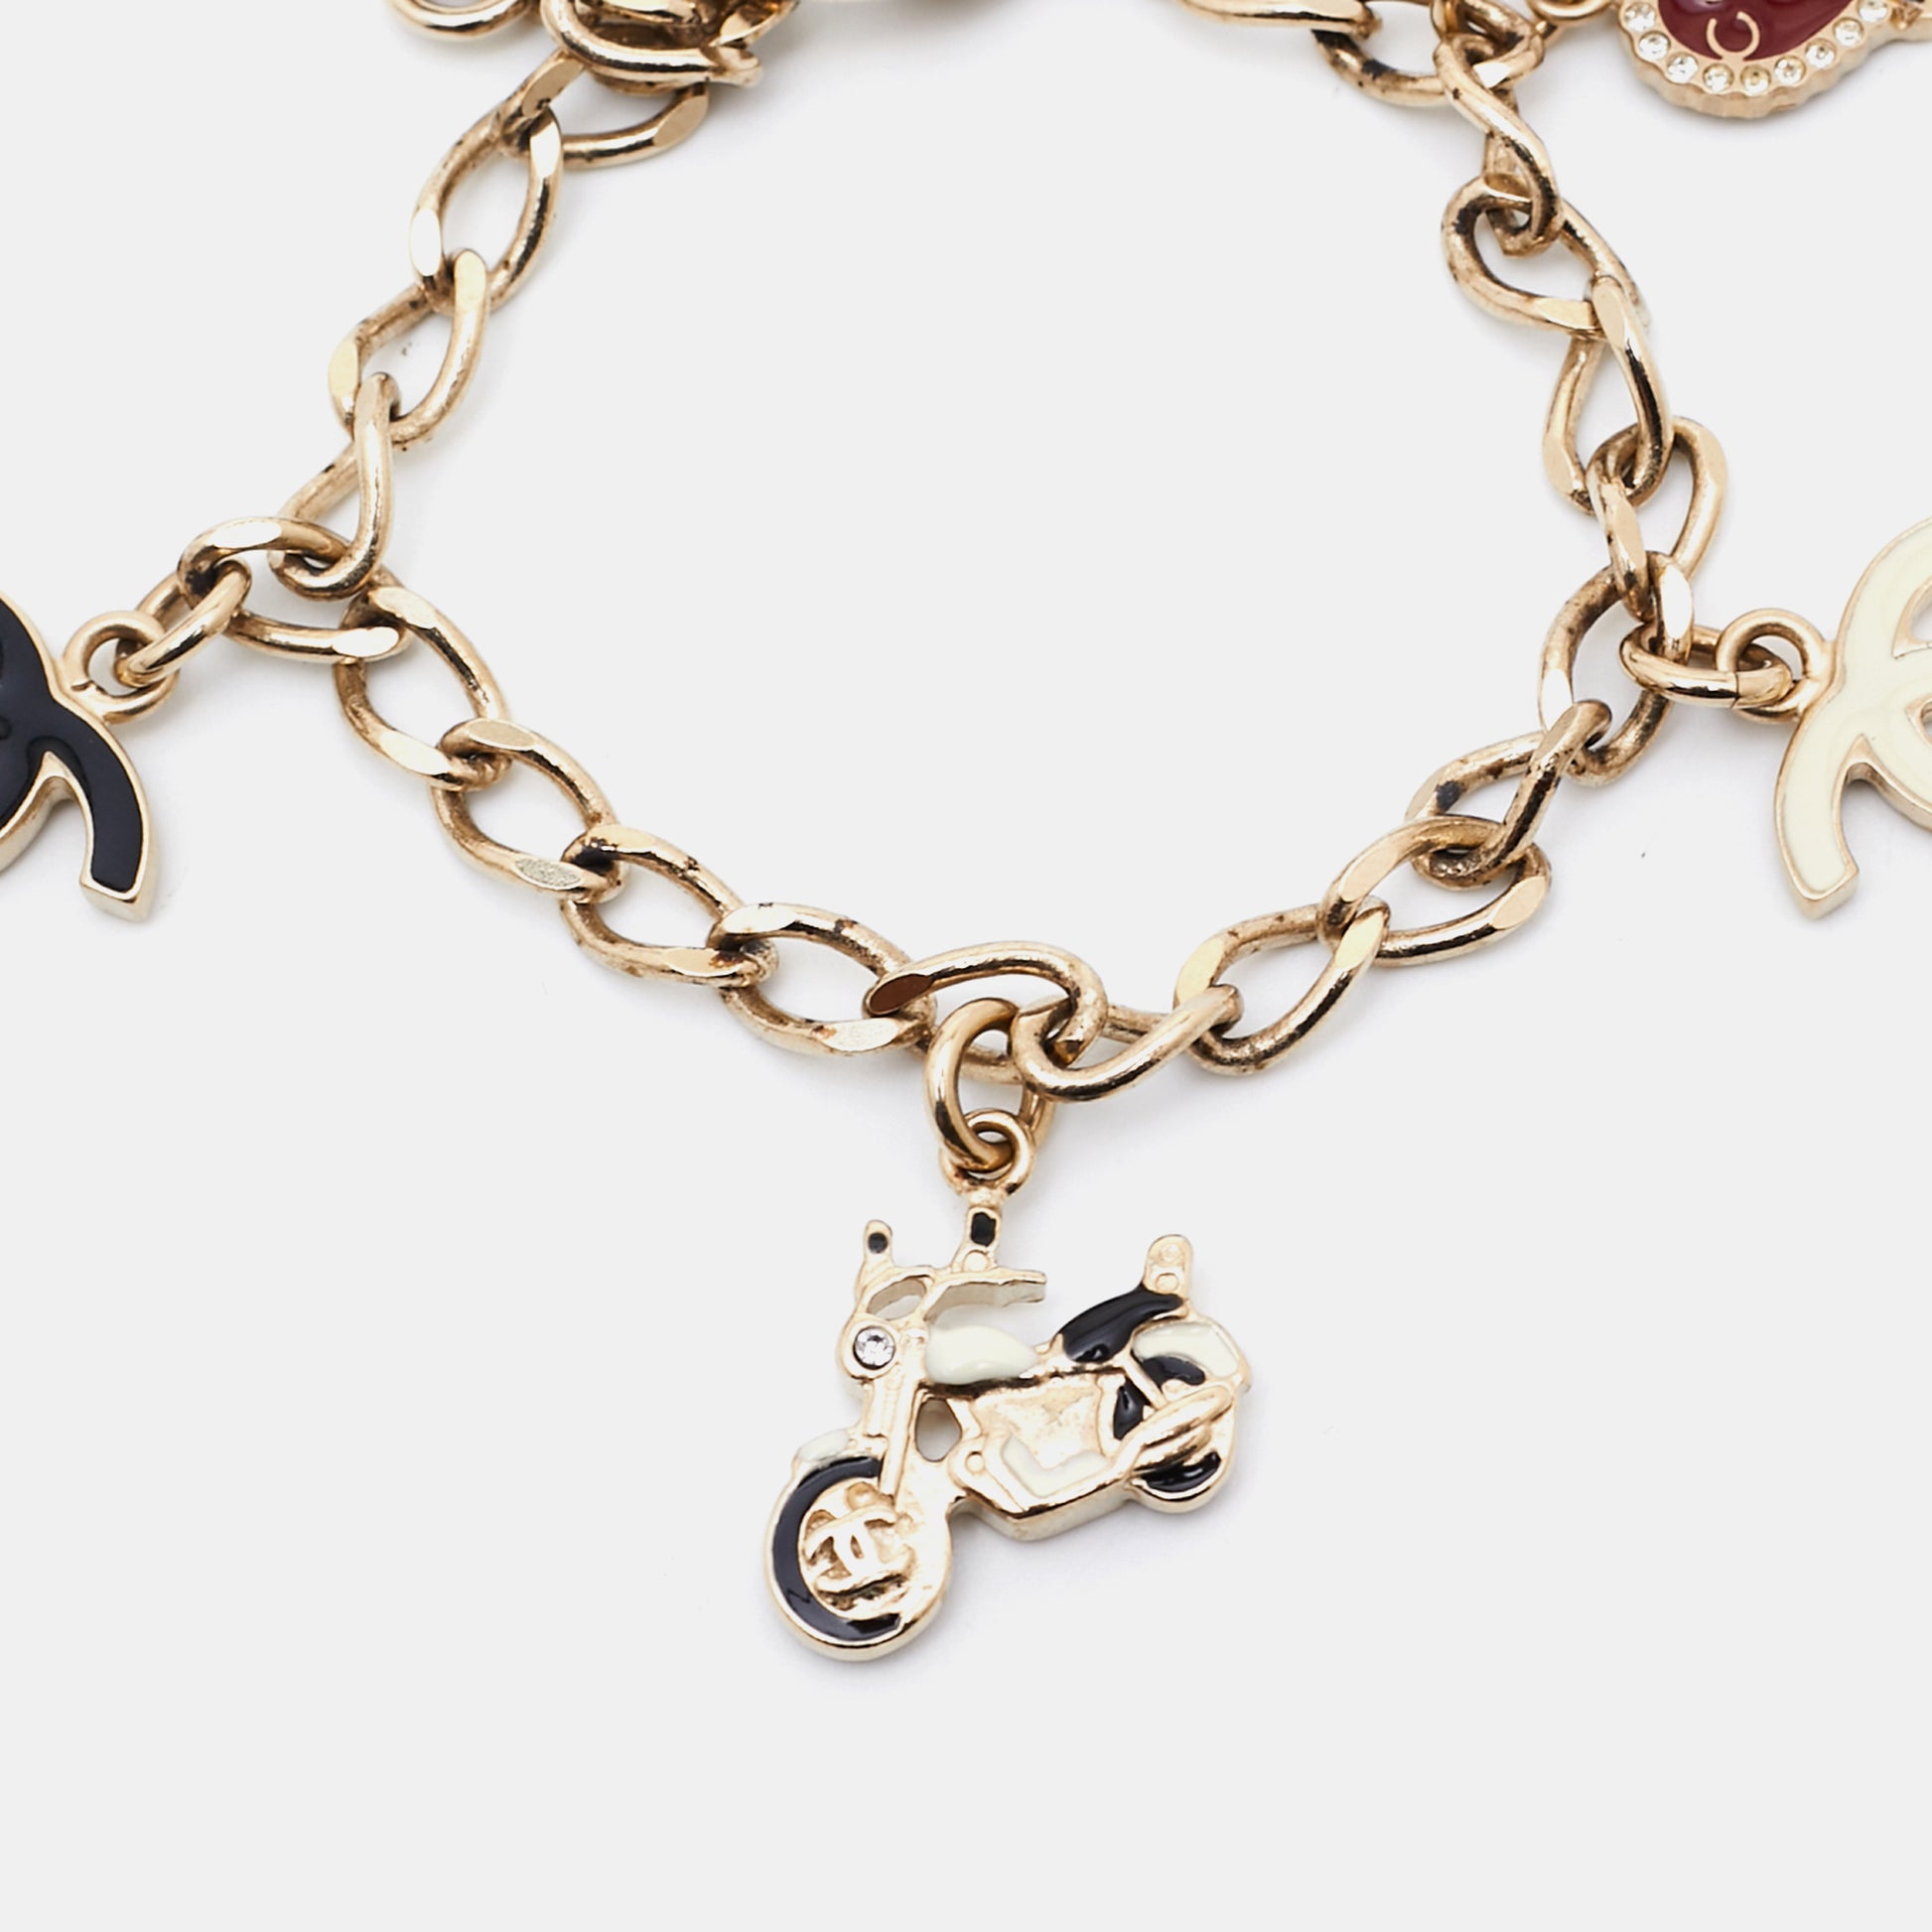 Chanel Gold Bracelet